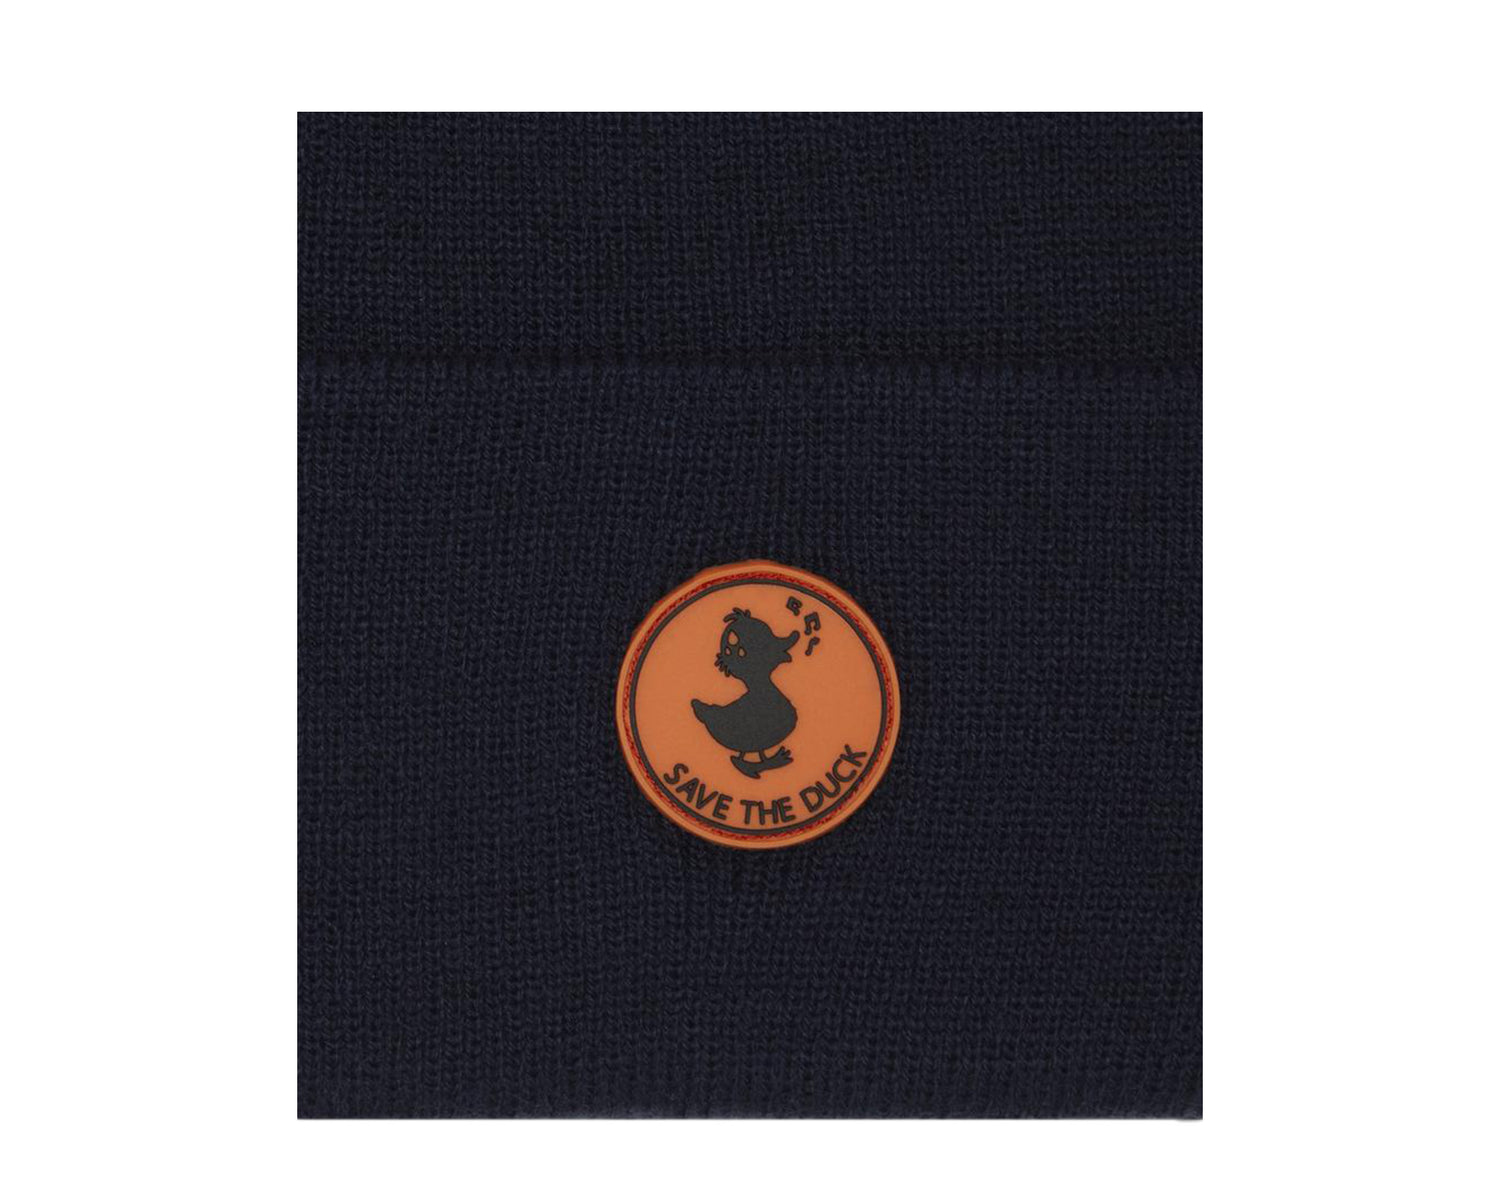 Save The Duck Small Logo Knit Cuffed Beanie